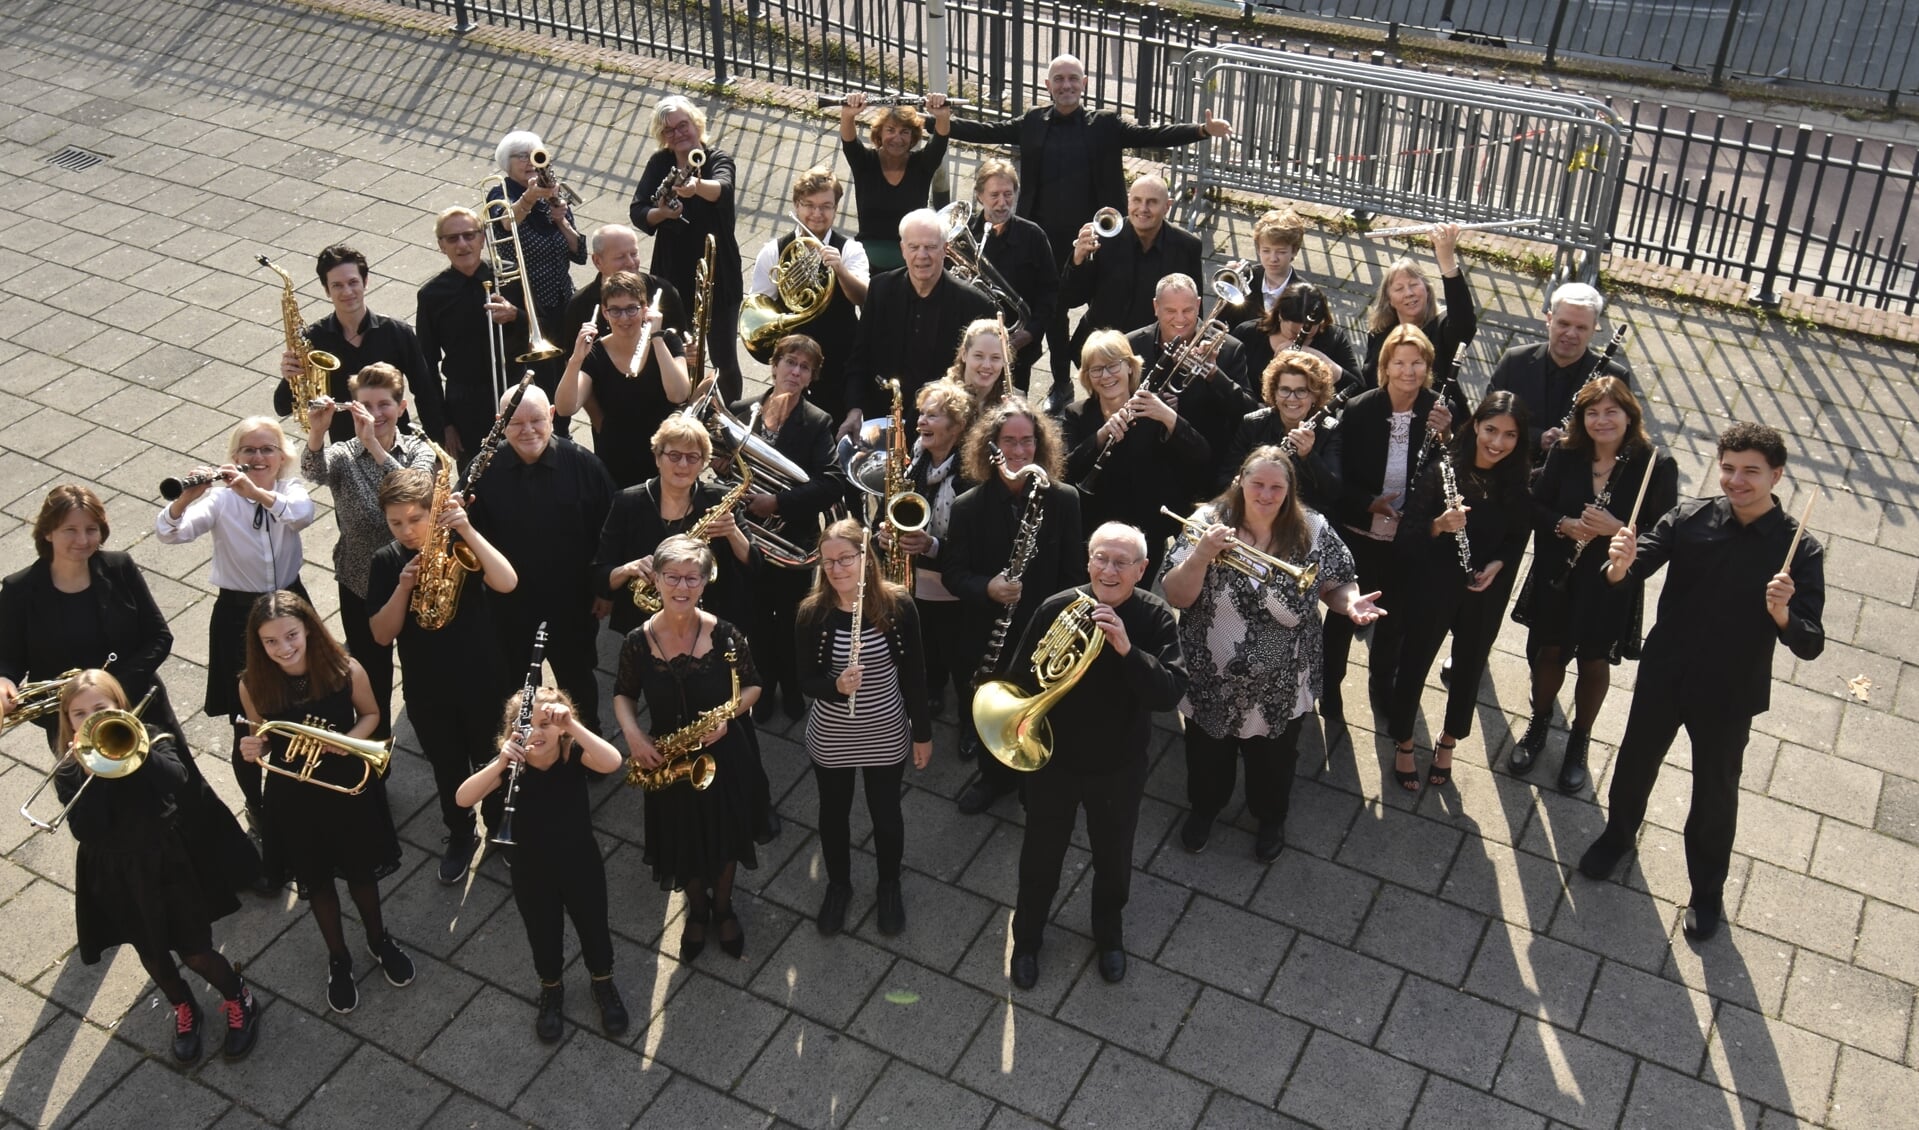 Groepsfoto met alle musicerende leden van het orkest.  